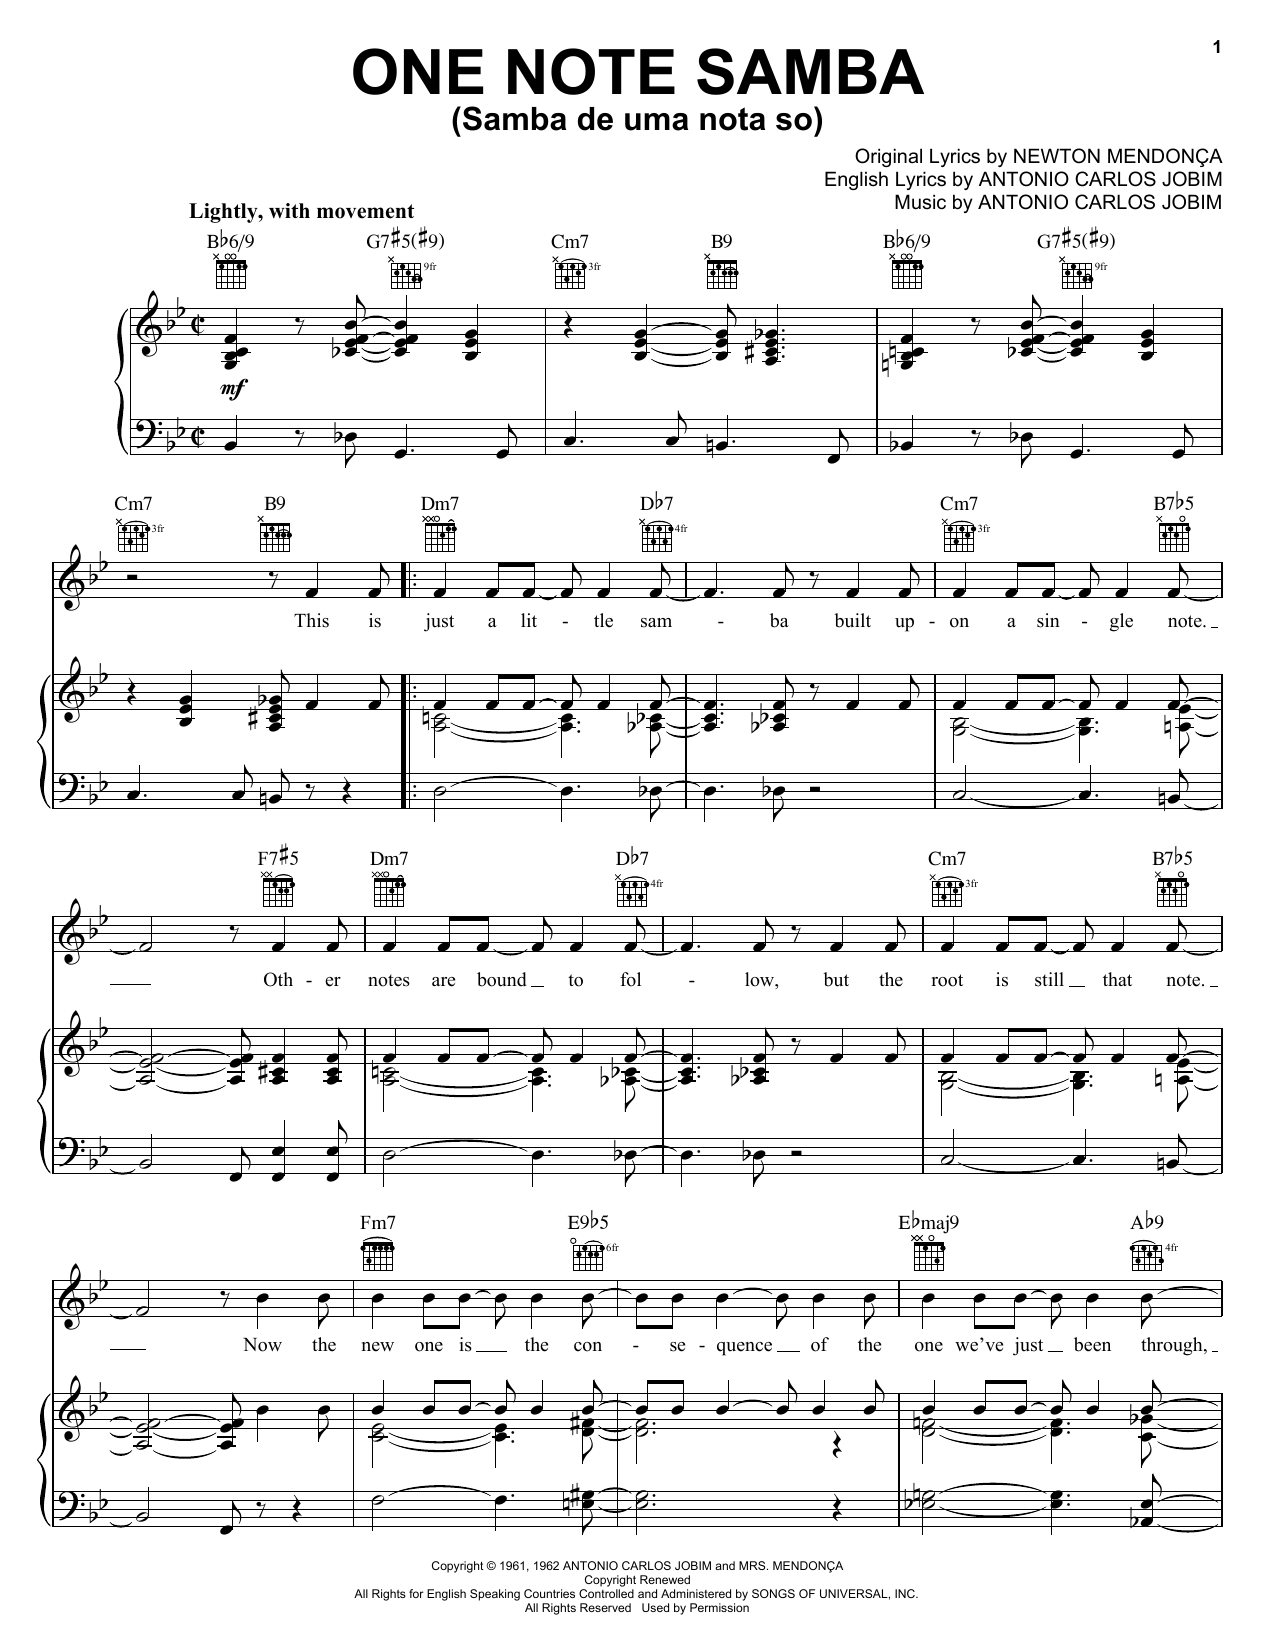 Antonio Carlos Jobim One Note Samba (Samba De Uma Nota So) Sheet Music Notes & Chords for Tenor Saxophone - Download or Print PDF